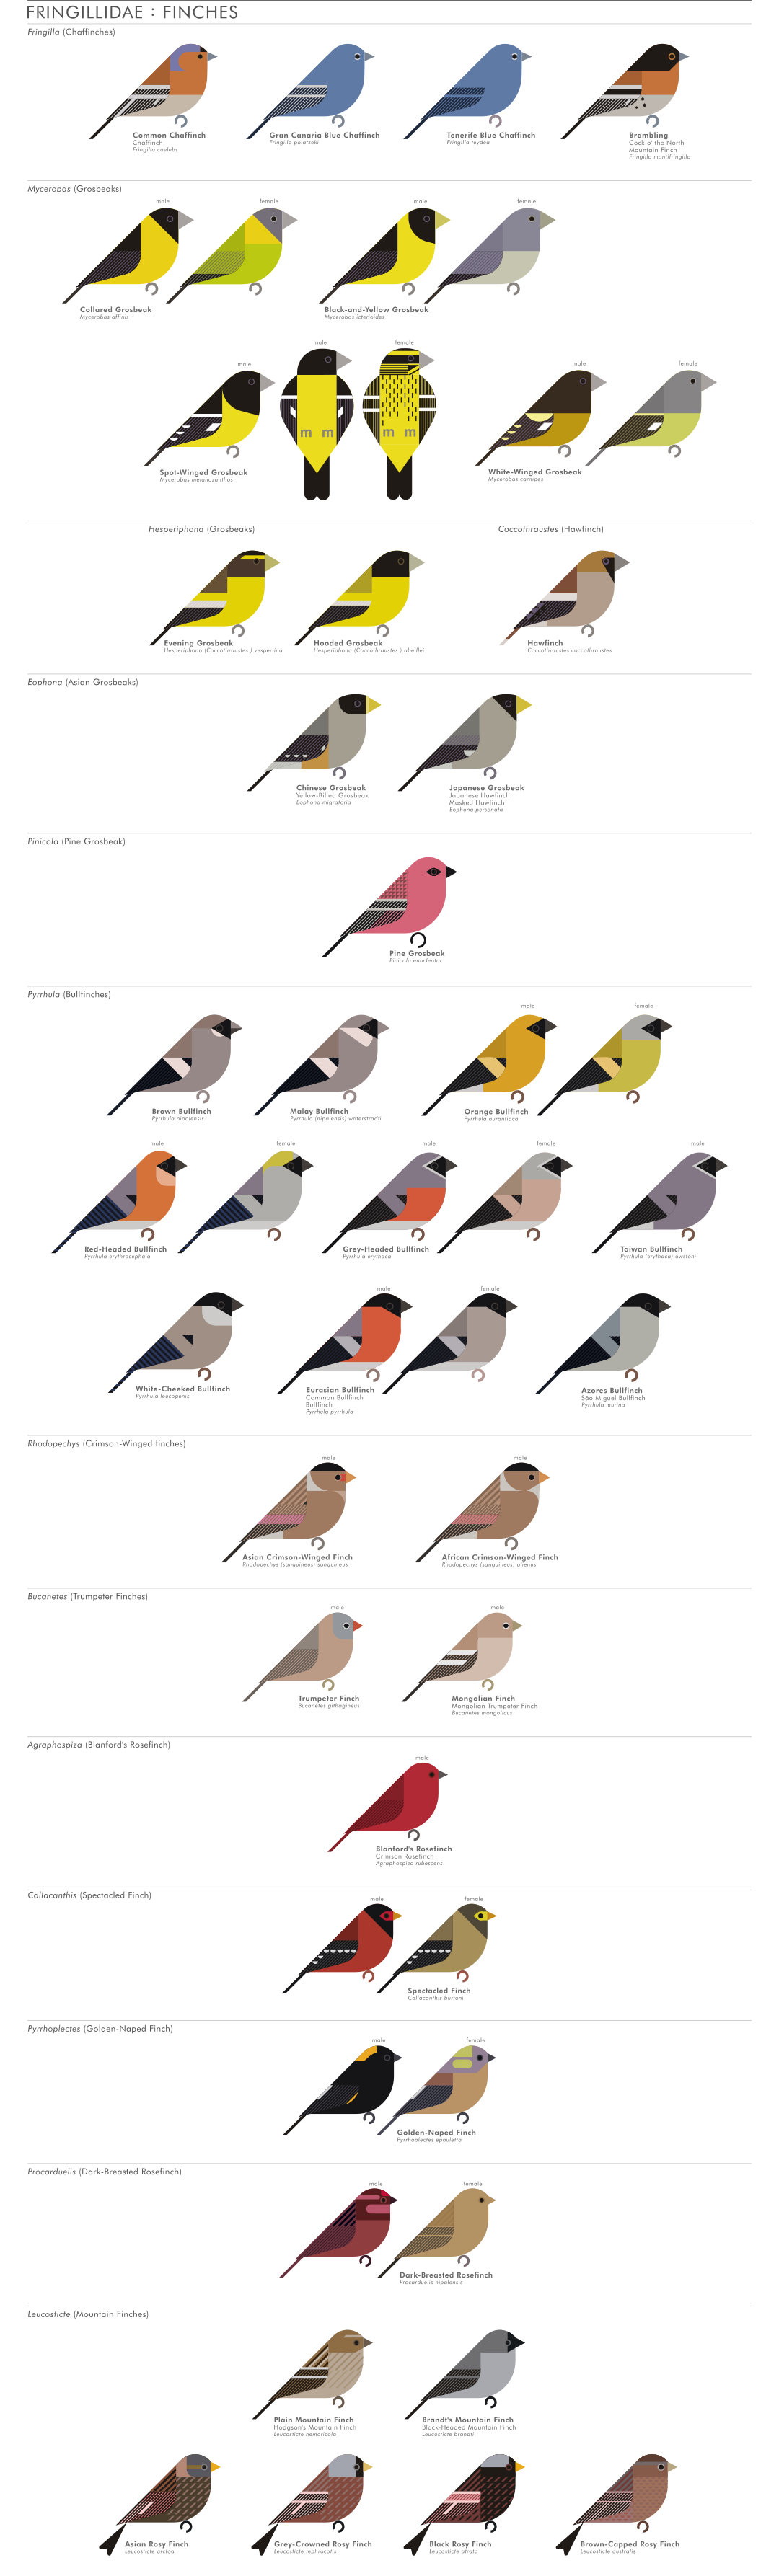 scott partridge - AVE - avian vector encyclopedia - finches - bird vector art